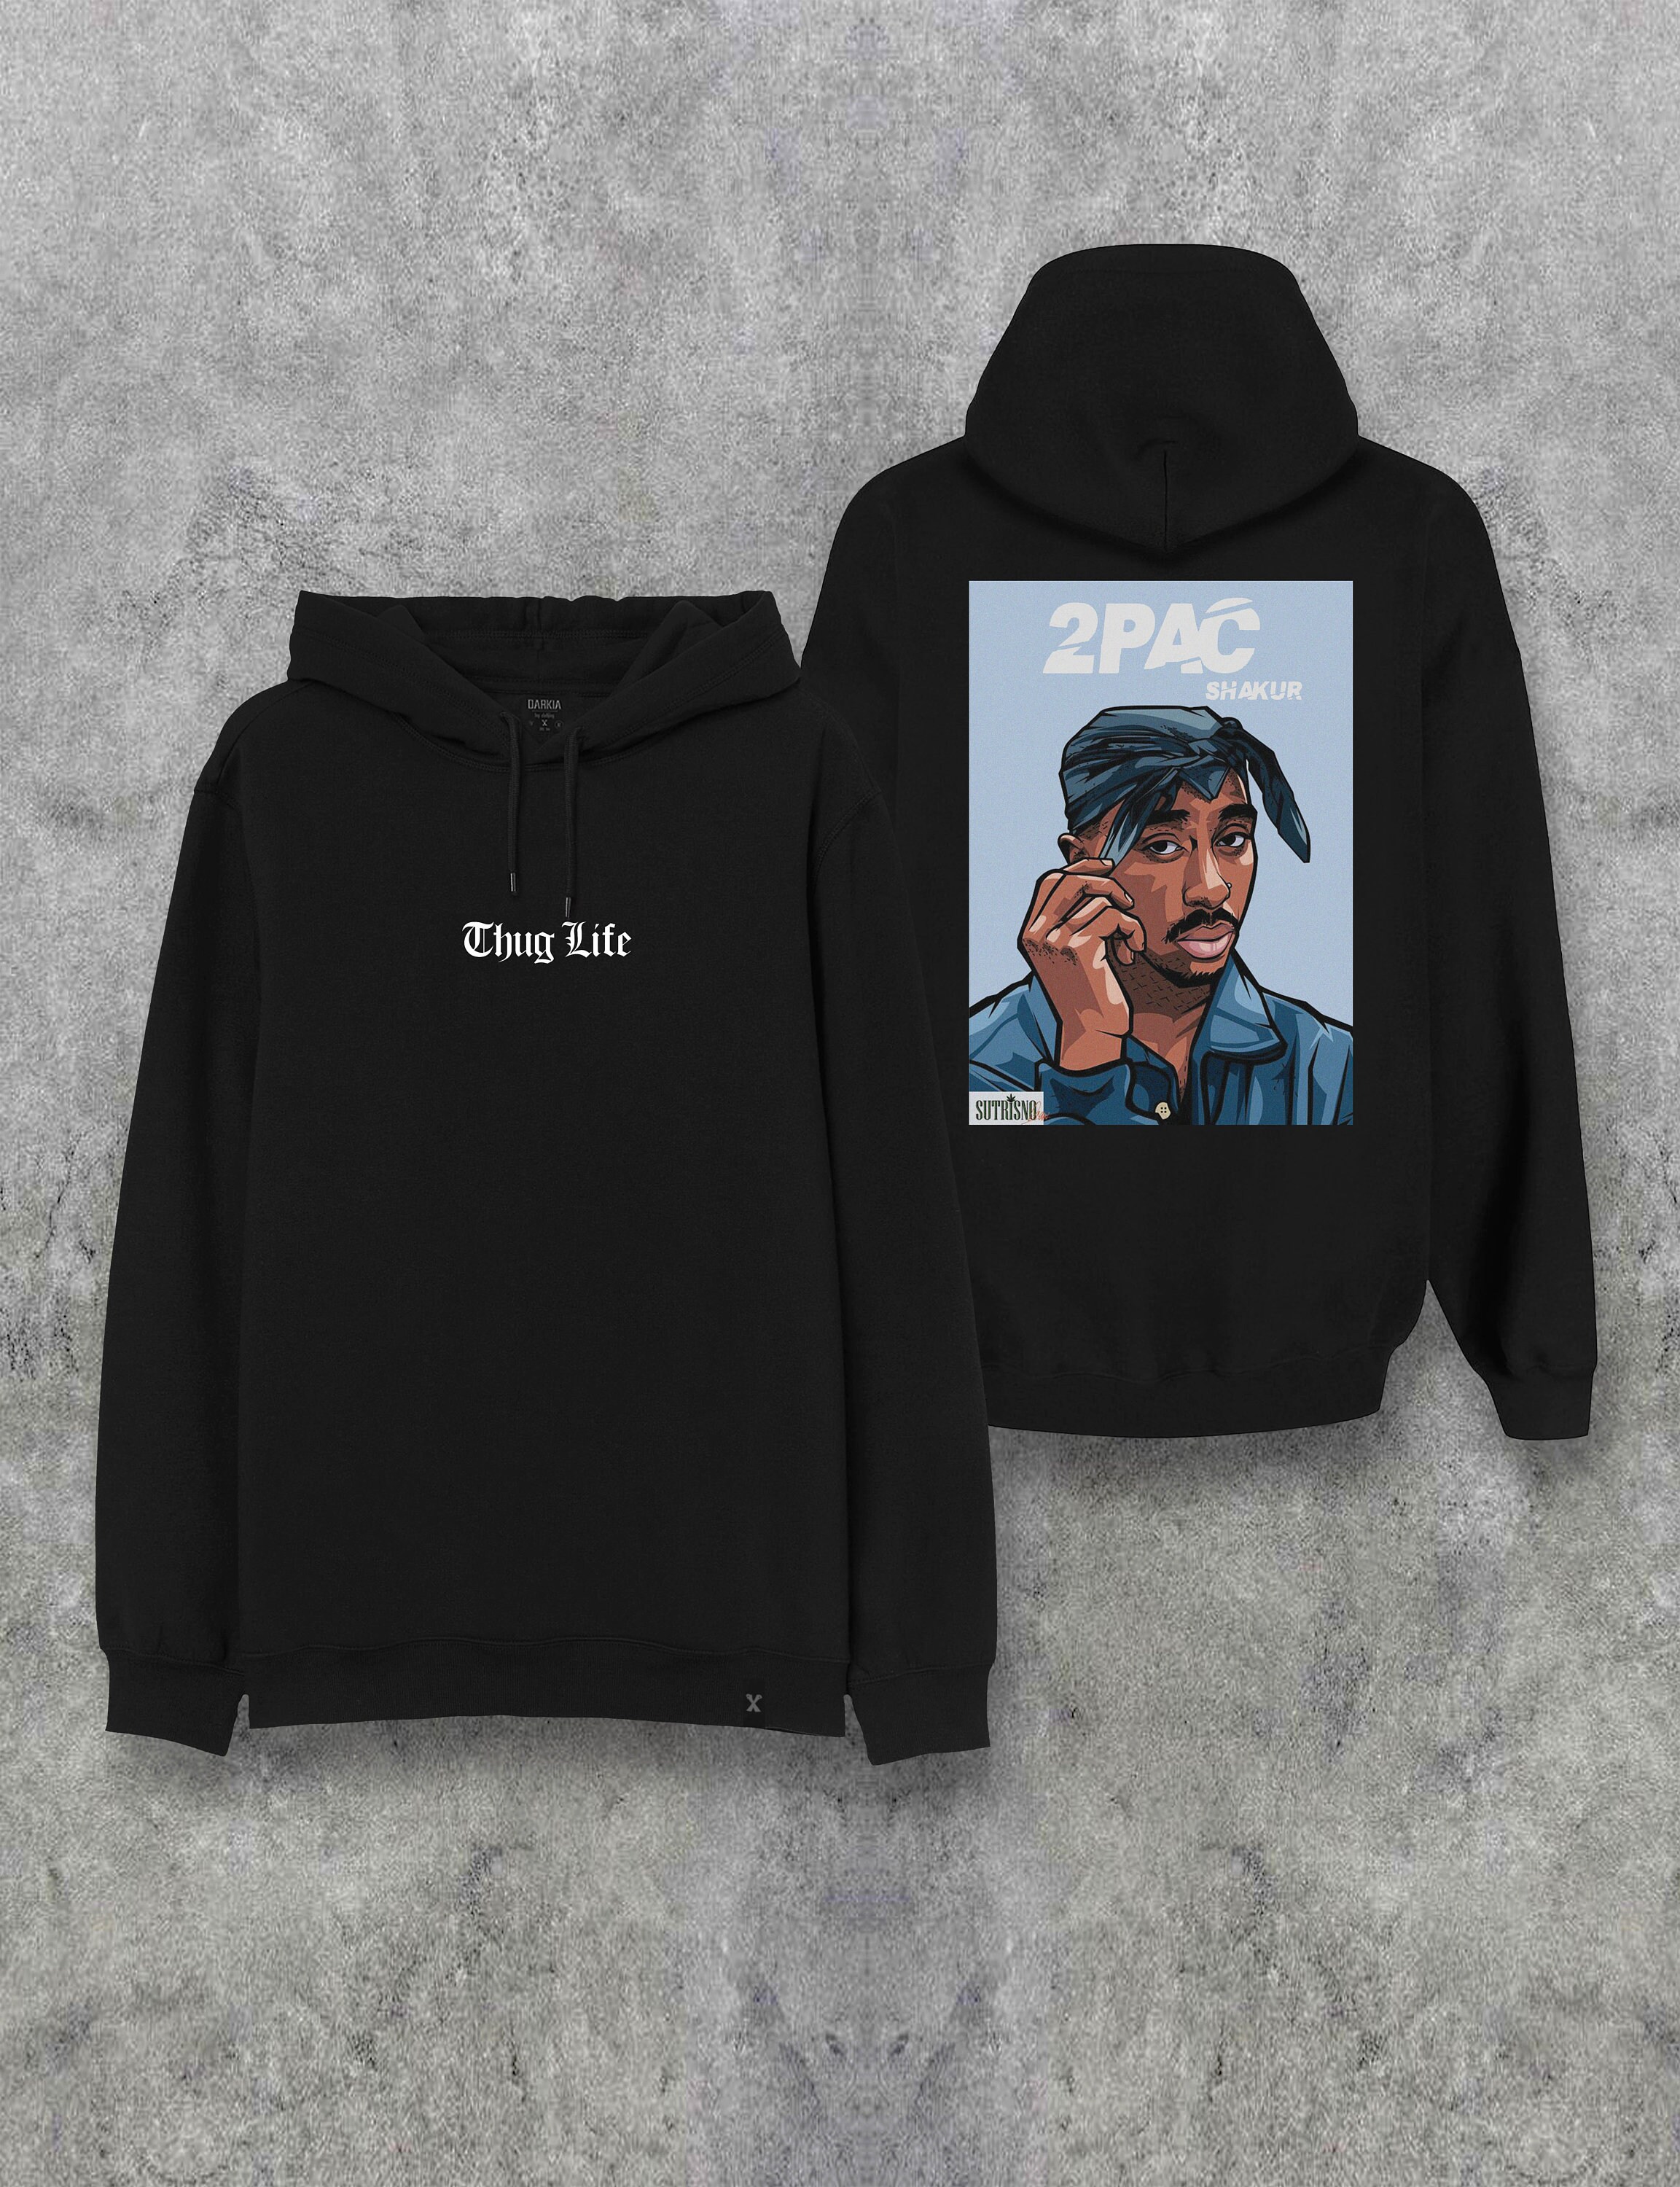 Tupac 2Pac Shakur Thug Life Design Two Side Printed Long Sleeve Hoodie